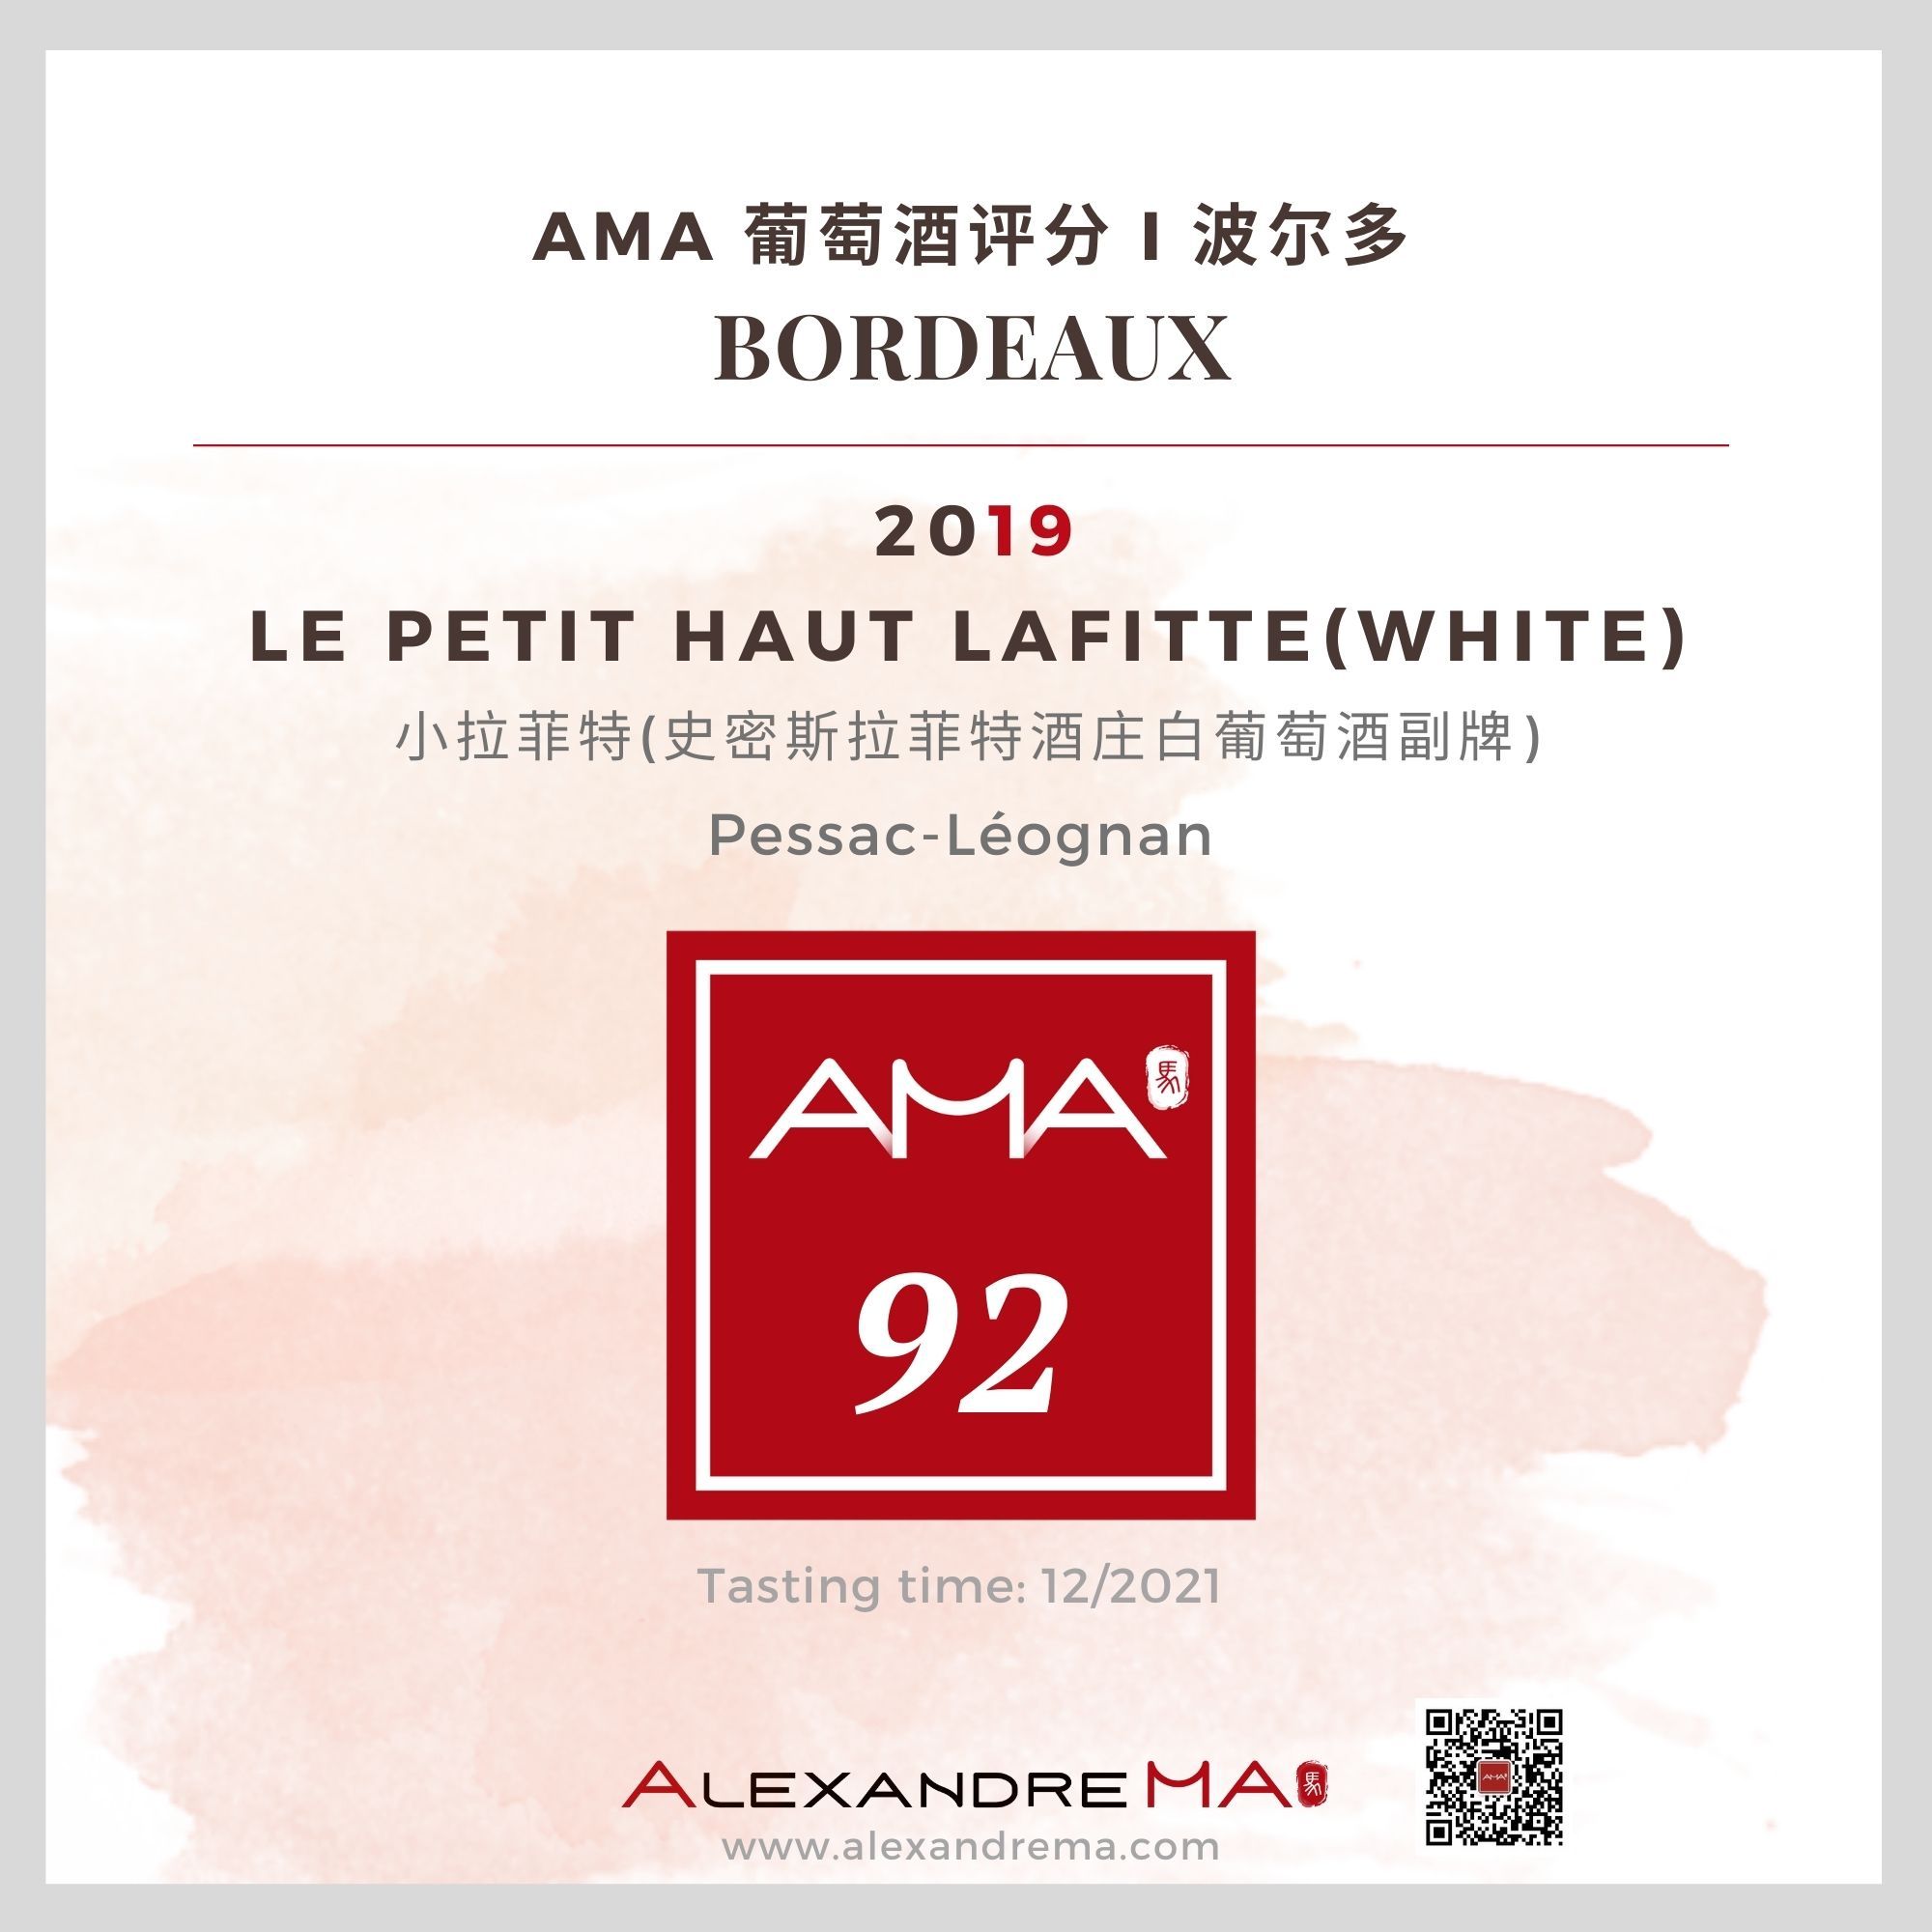 Le Petit Smith Haut Lafitte-White-2019 小拉菲特 - Alexandre Ma